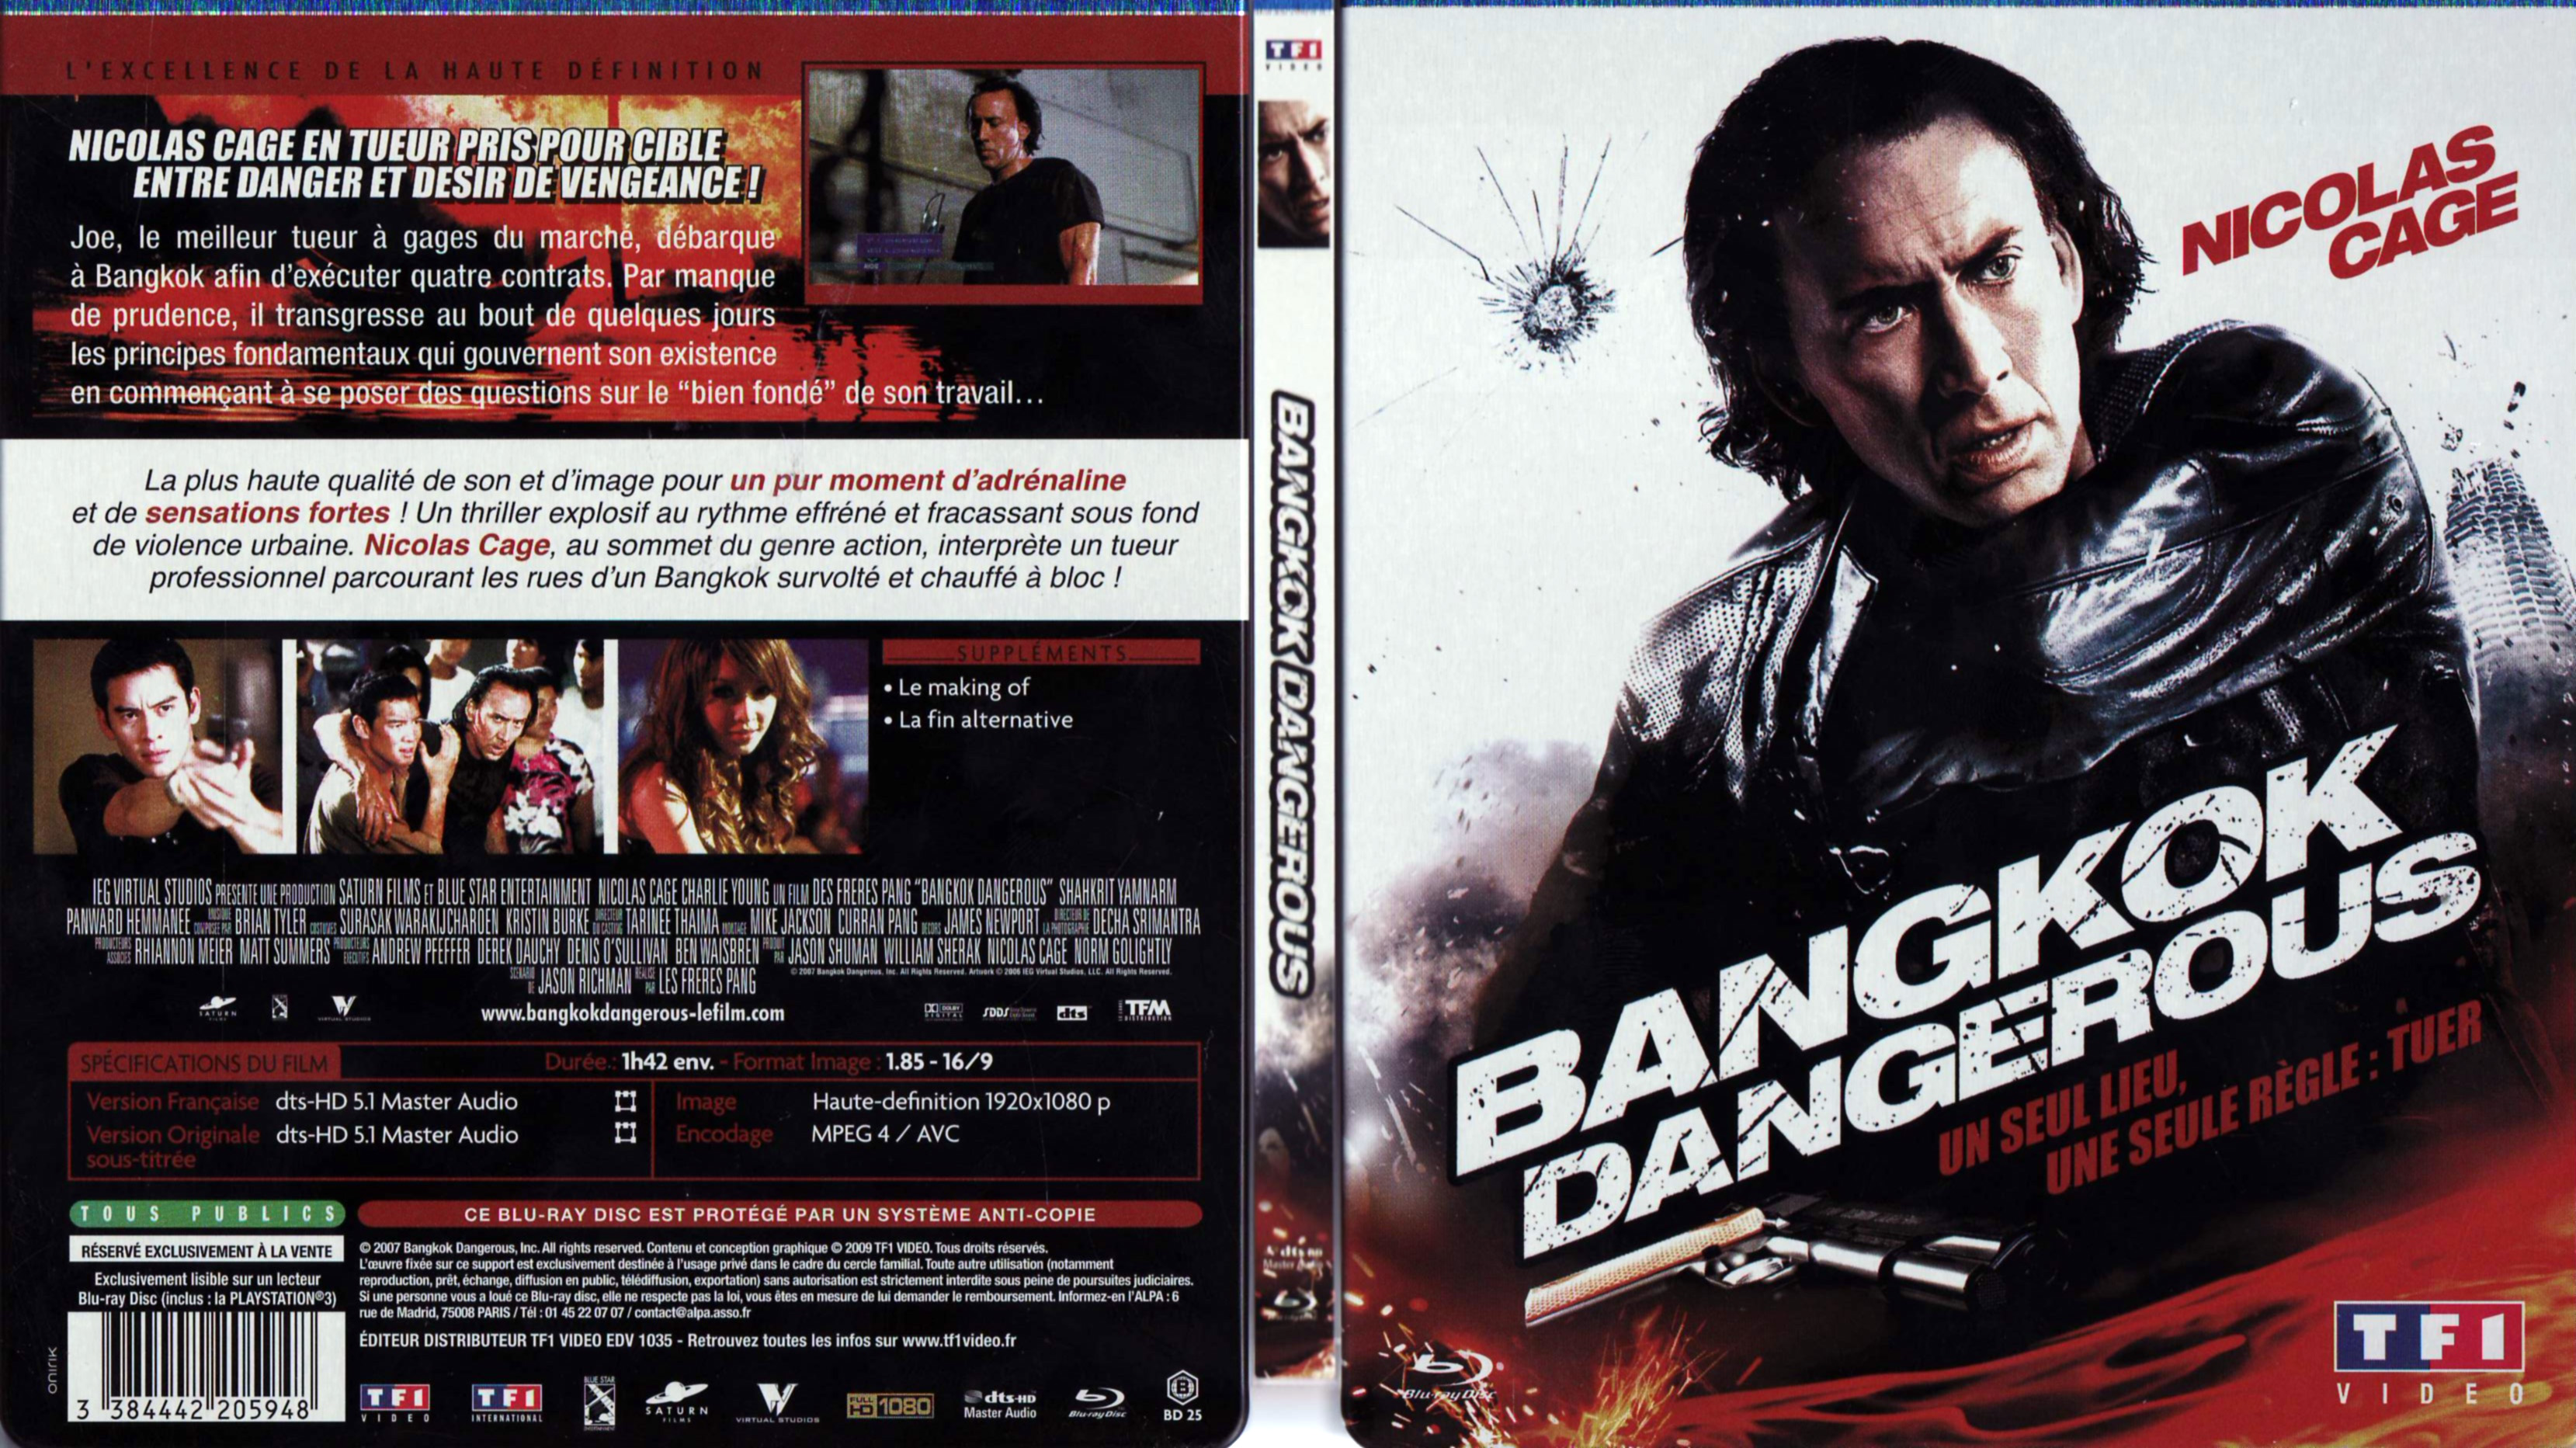 Jaquette DVD Bangkok dangerous (2008) (BLU-RAY)